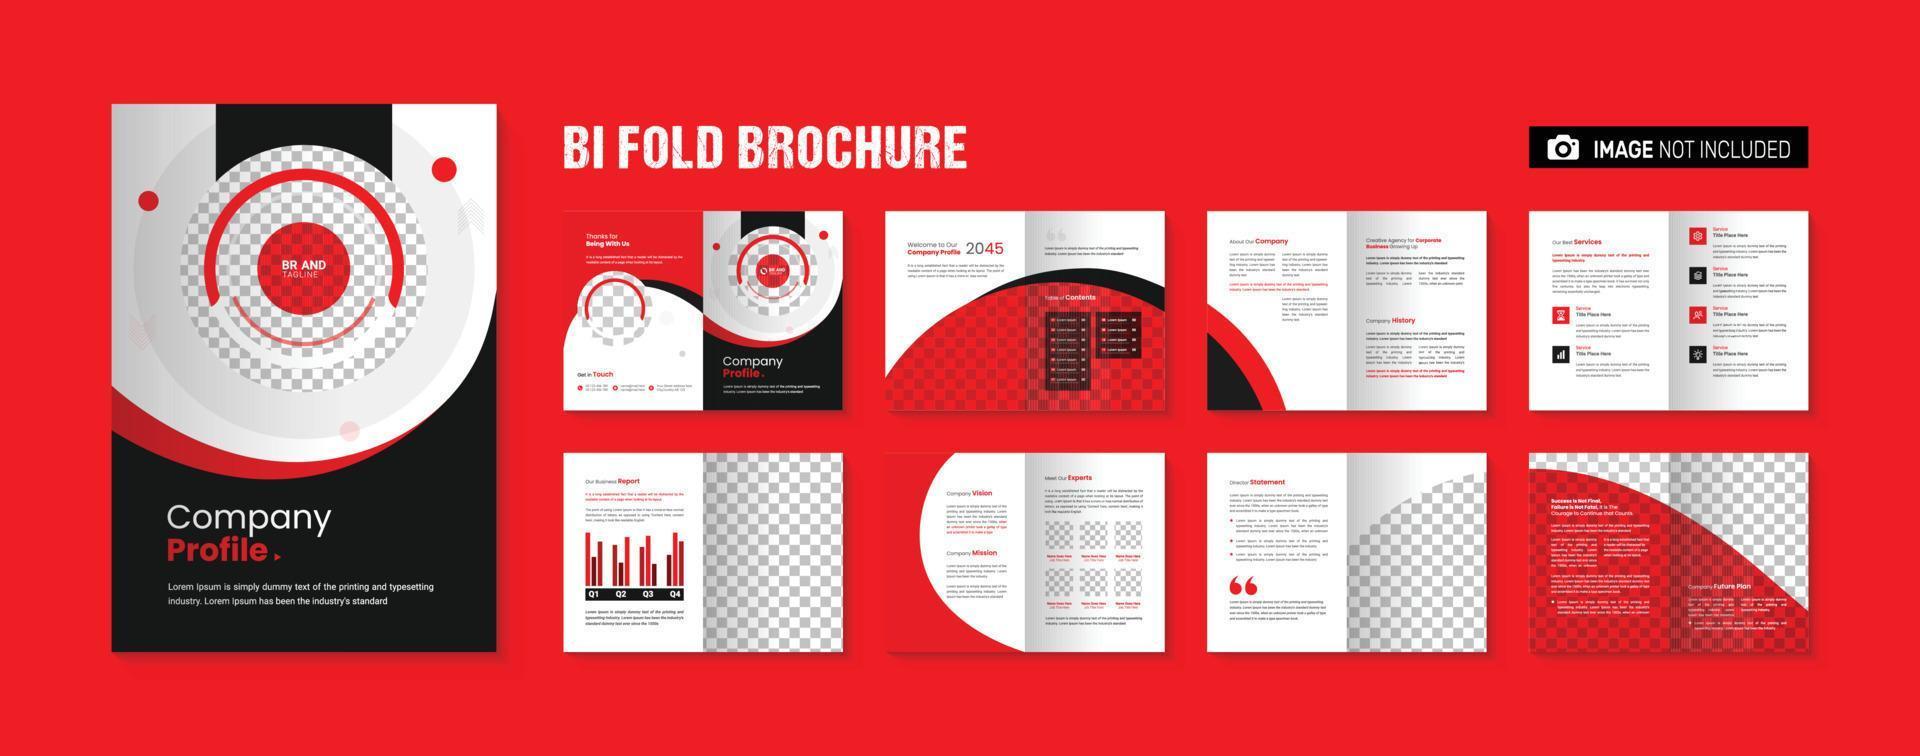 Bifold business company profile brochure template design vector